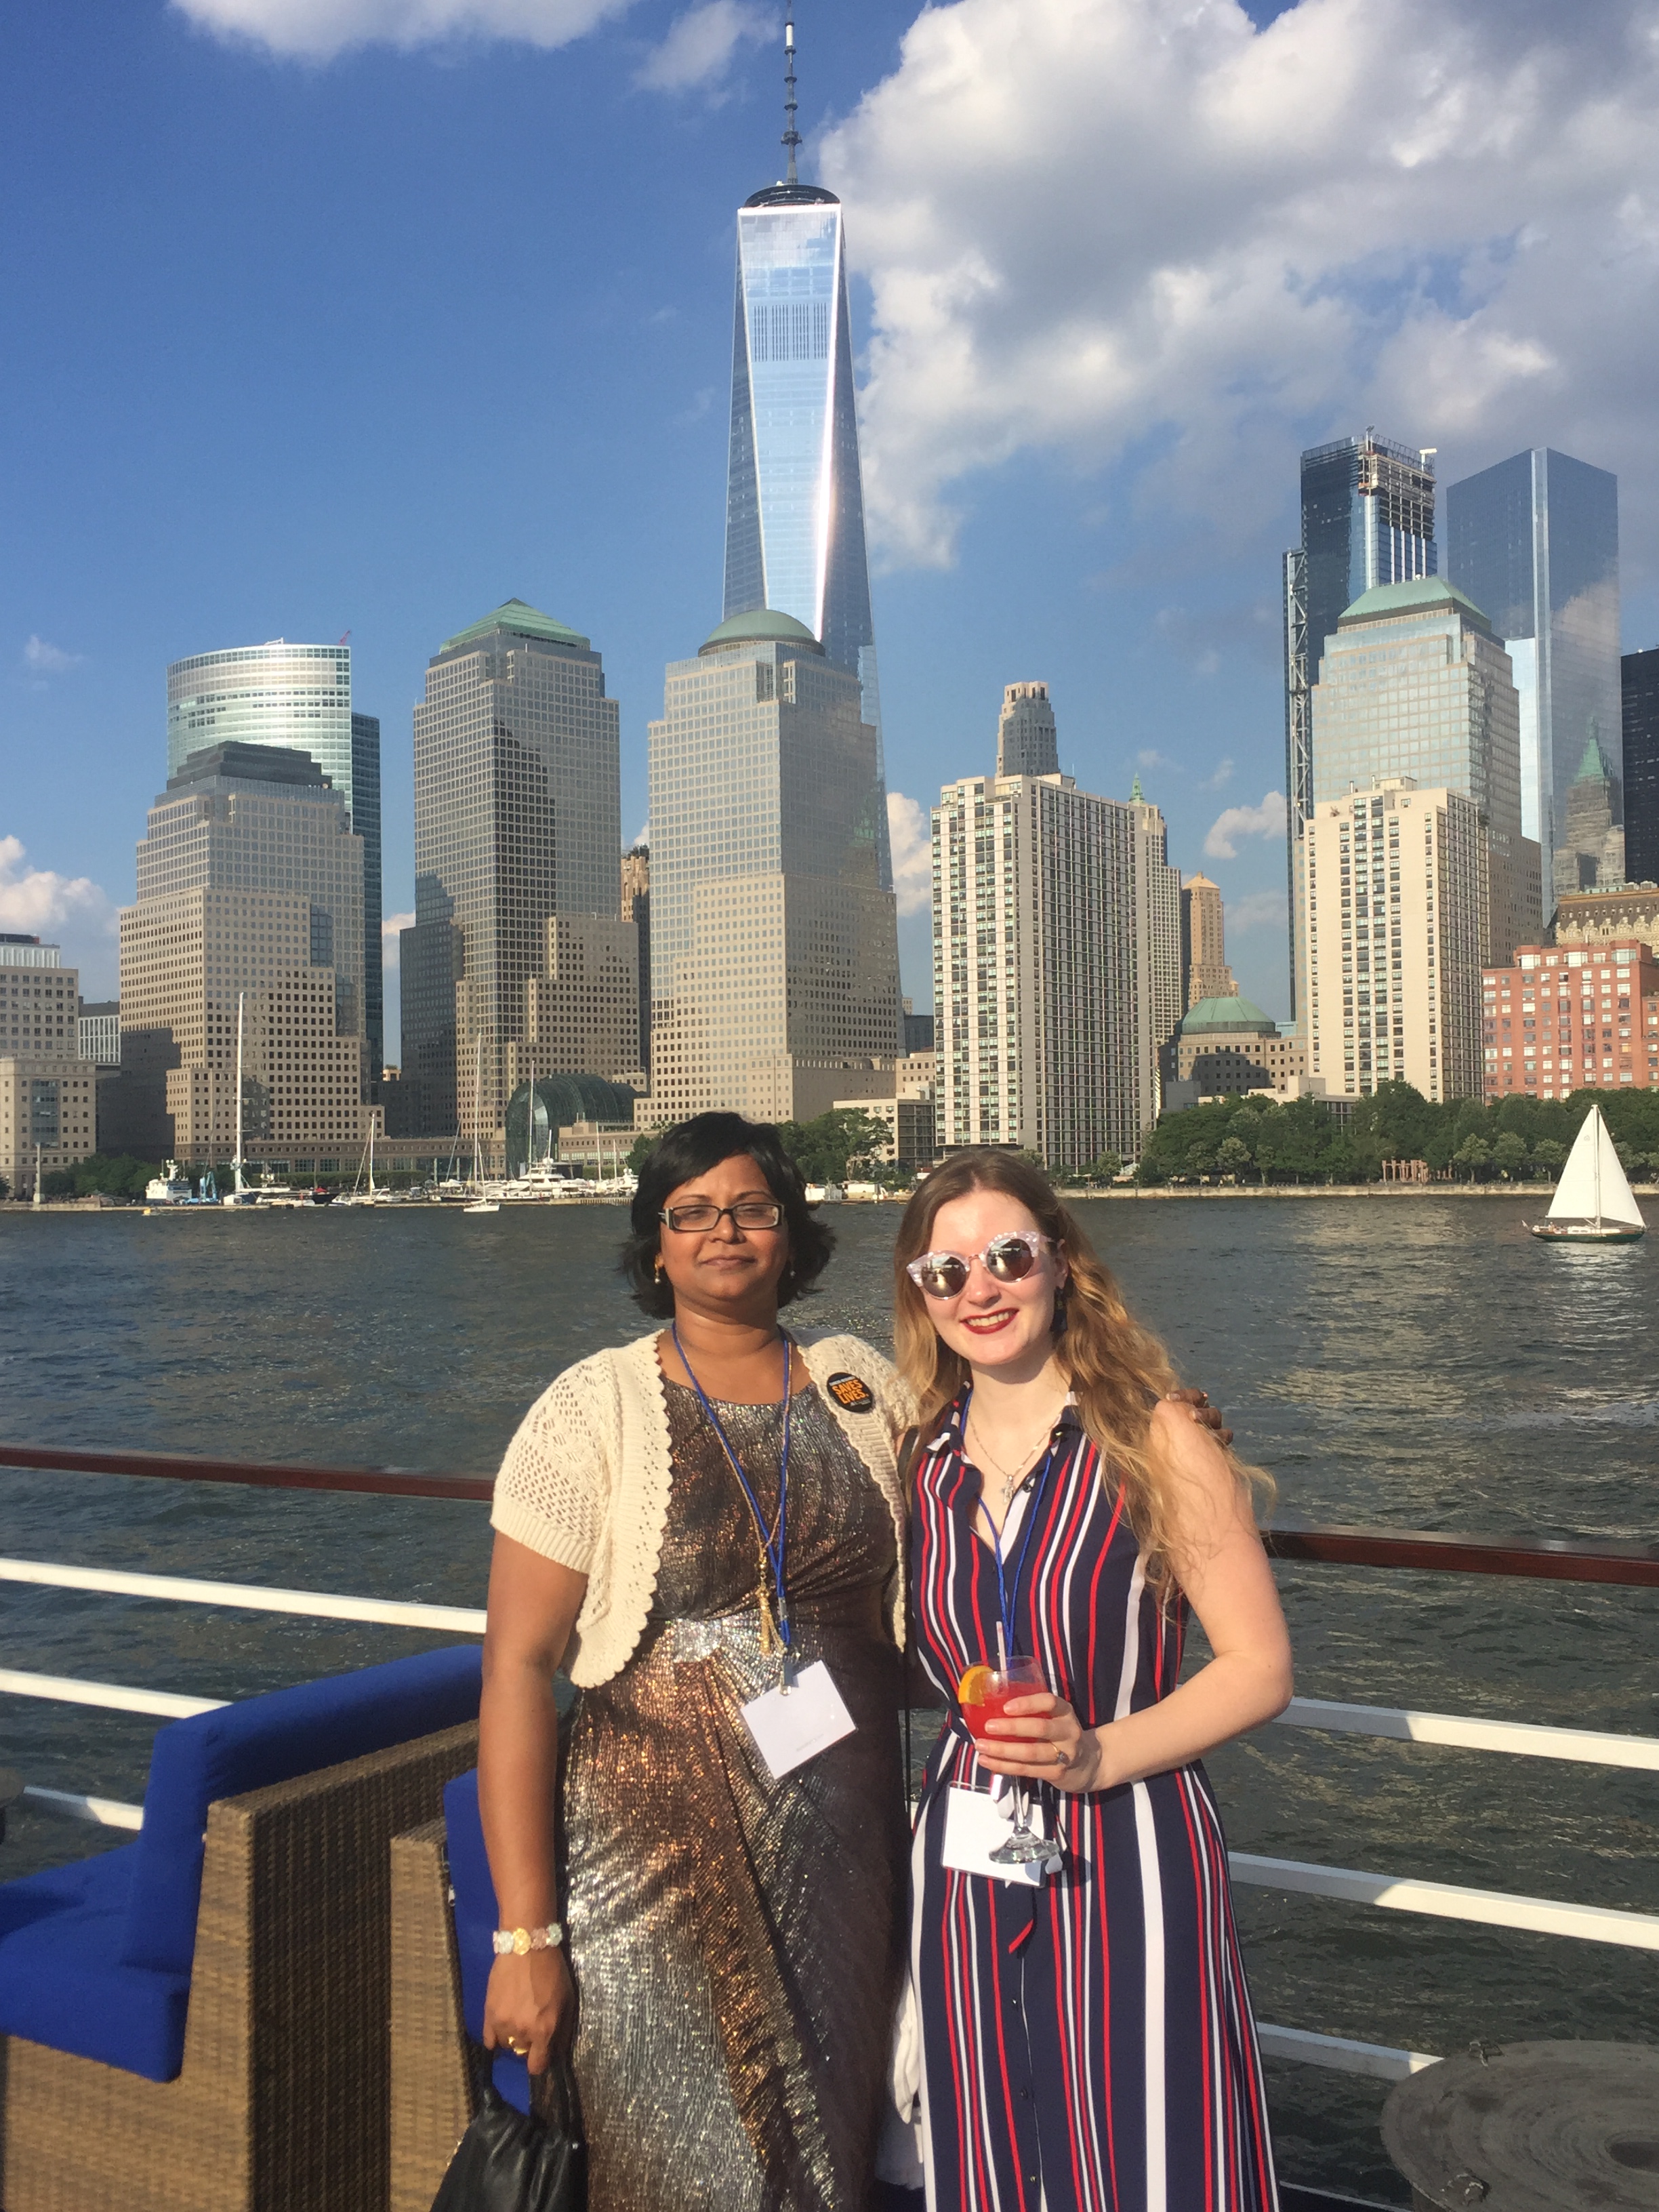 Nataliya Katsnelson joined the NJ/NY biotechnology community during major networking dinner cruise in New York.